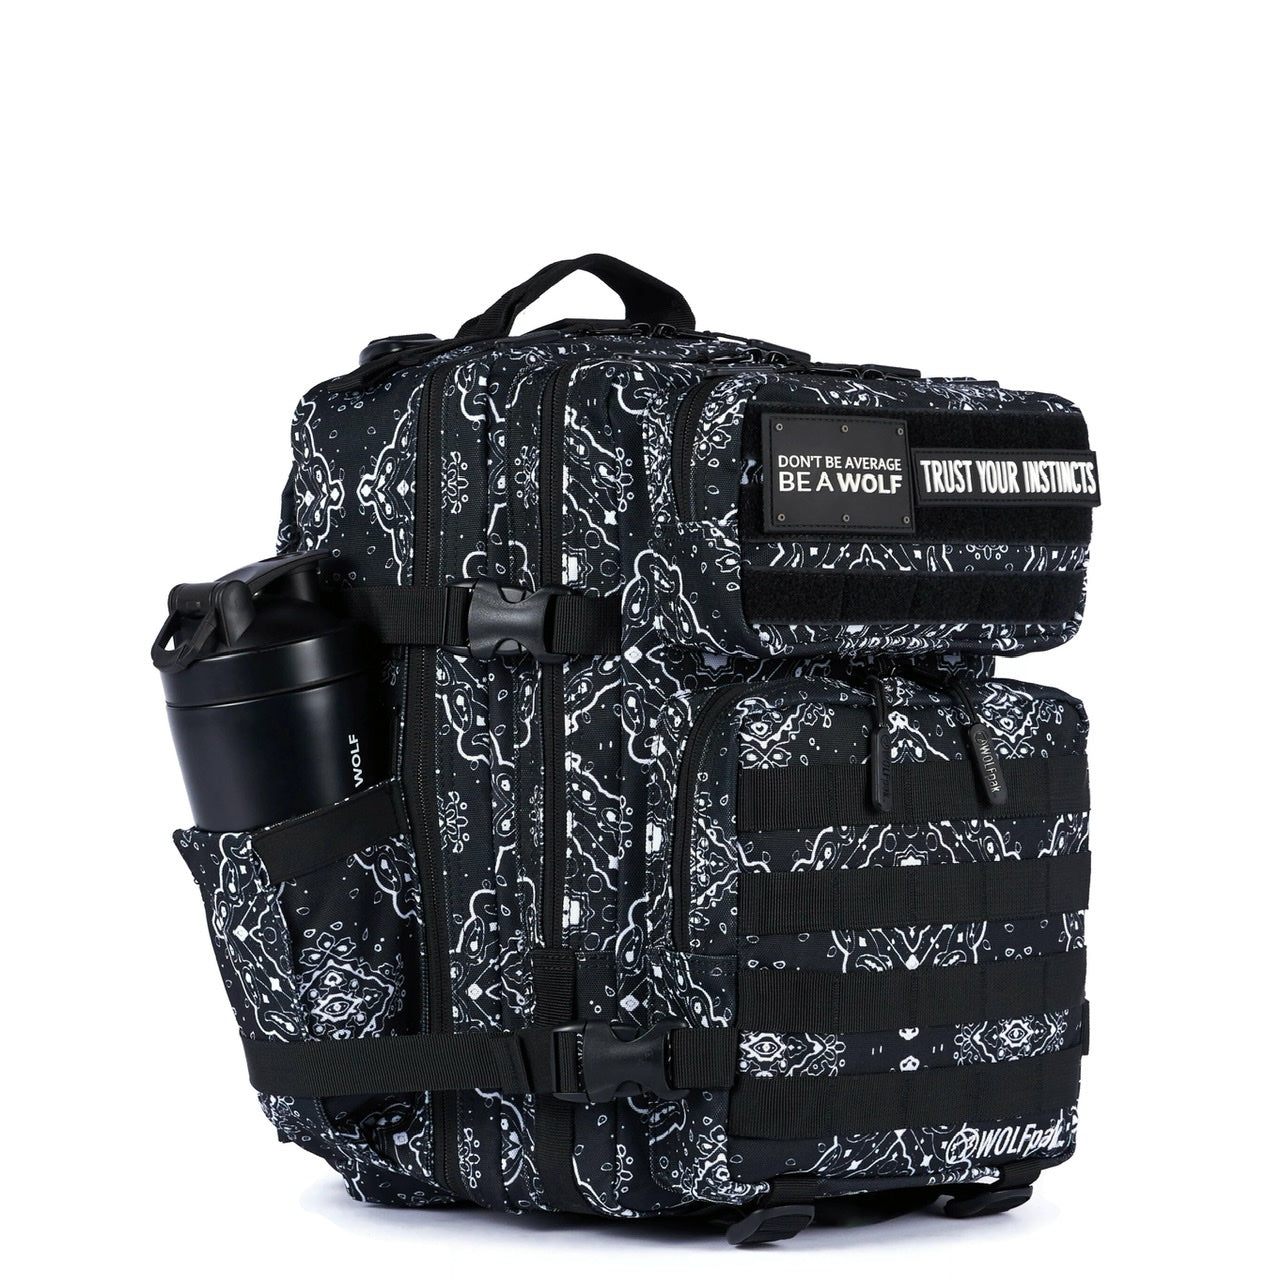 25L Backpack Black Bandana